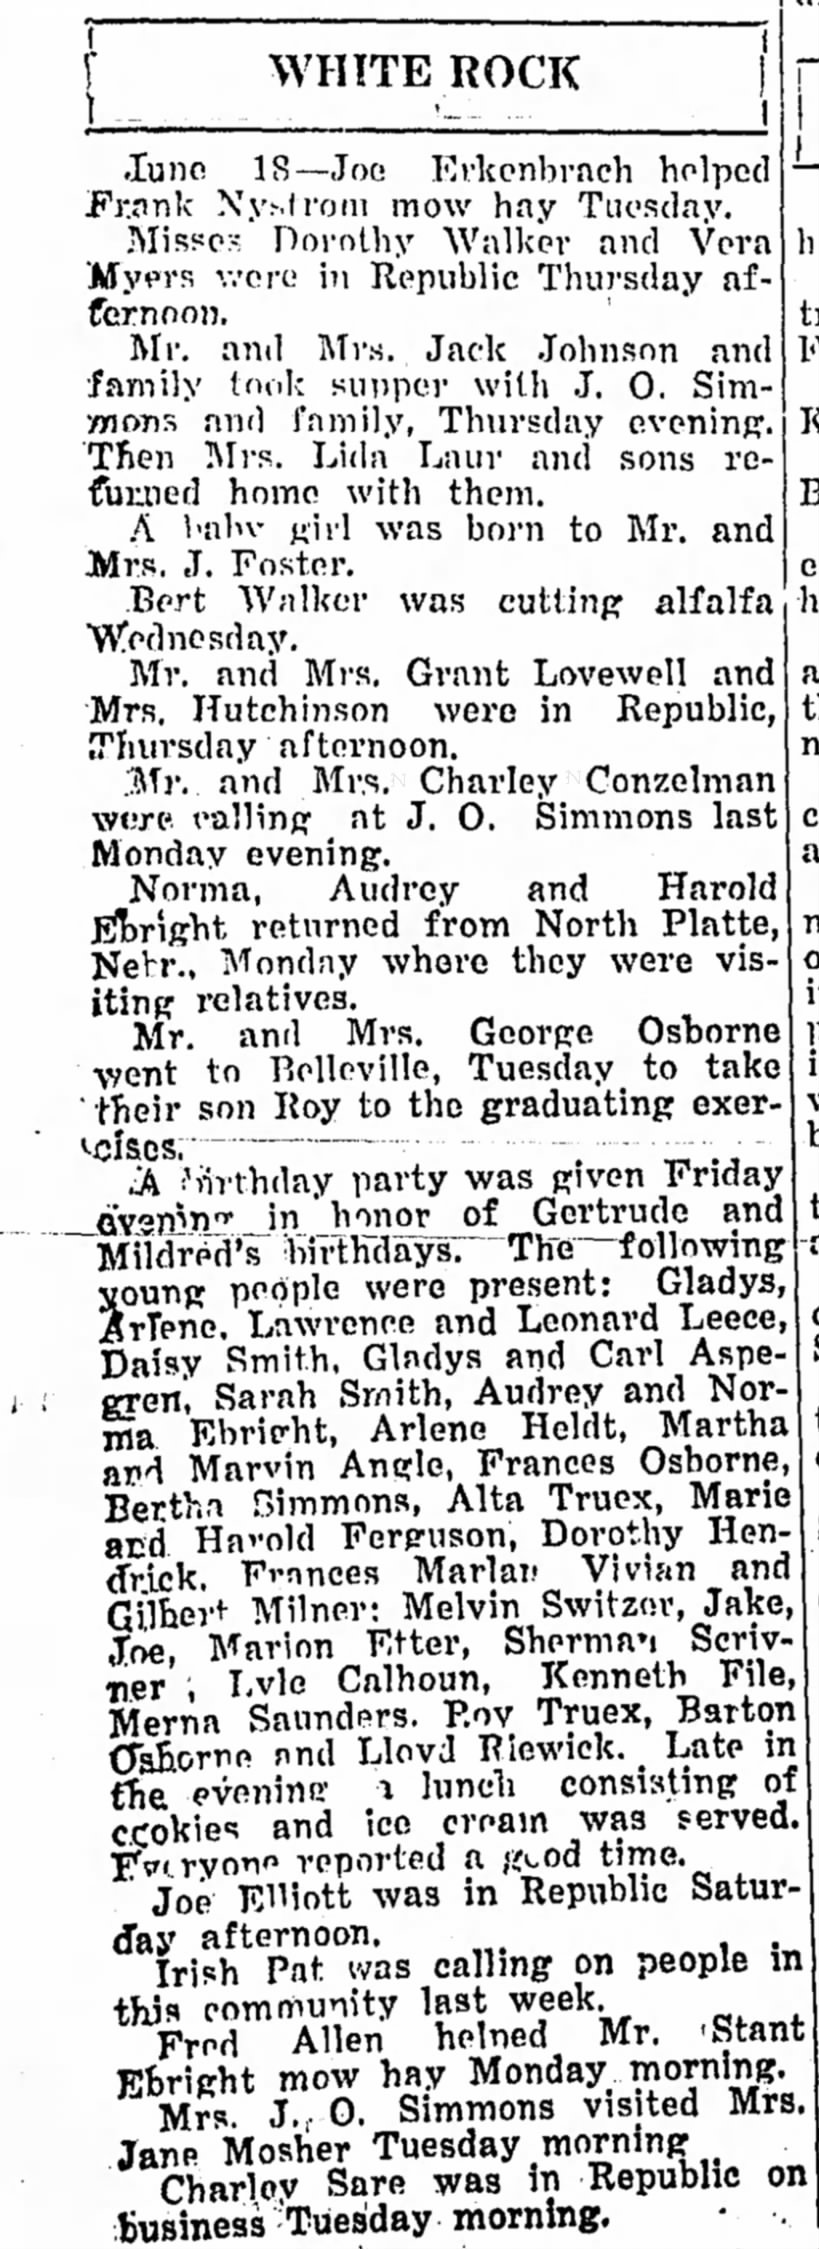 White Rock happenings June 20, 1929, part 1